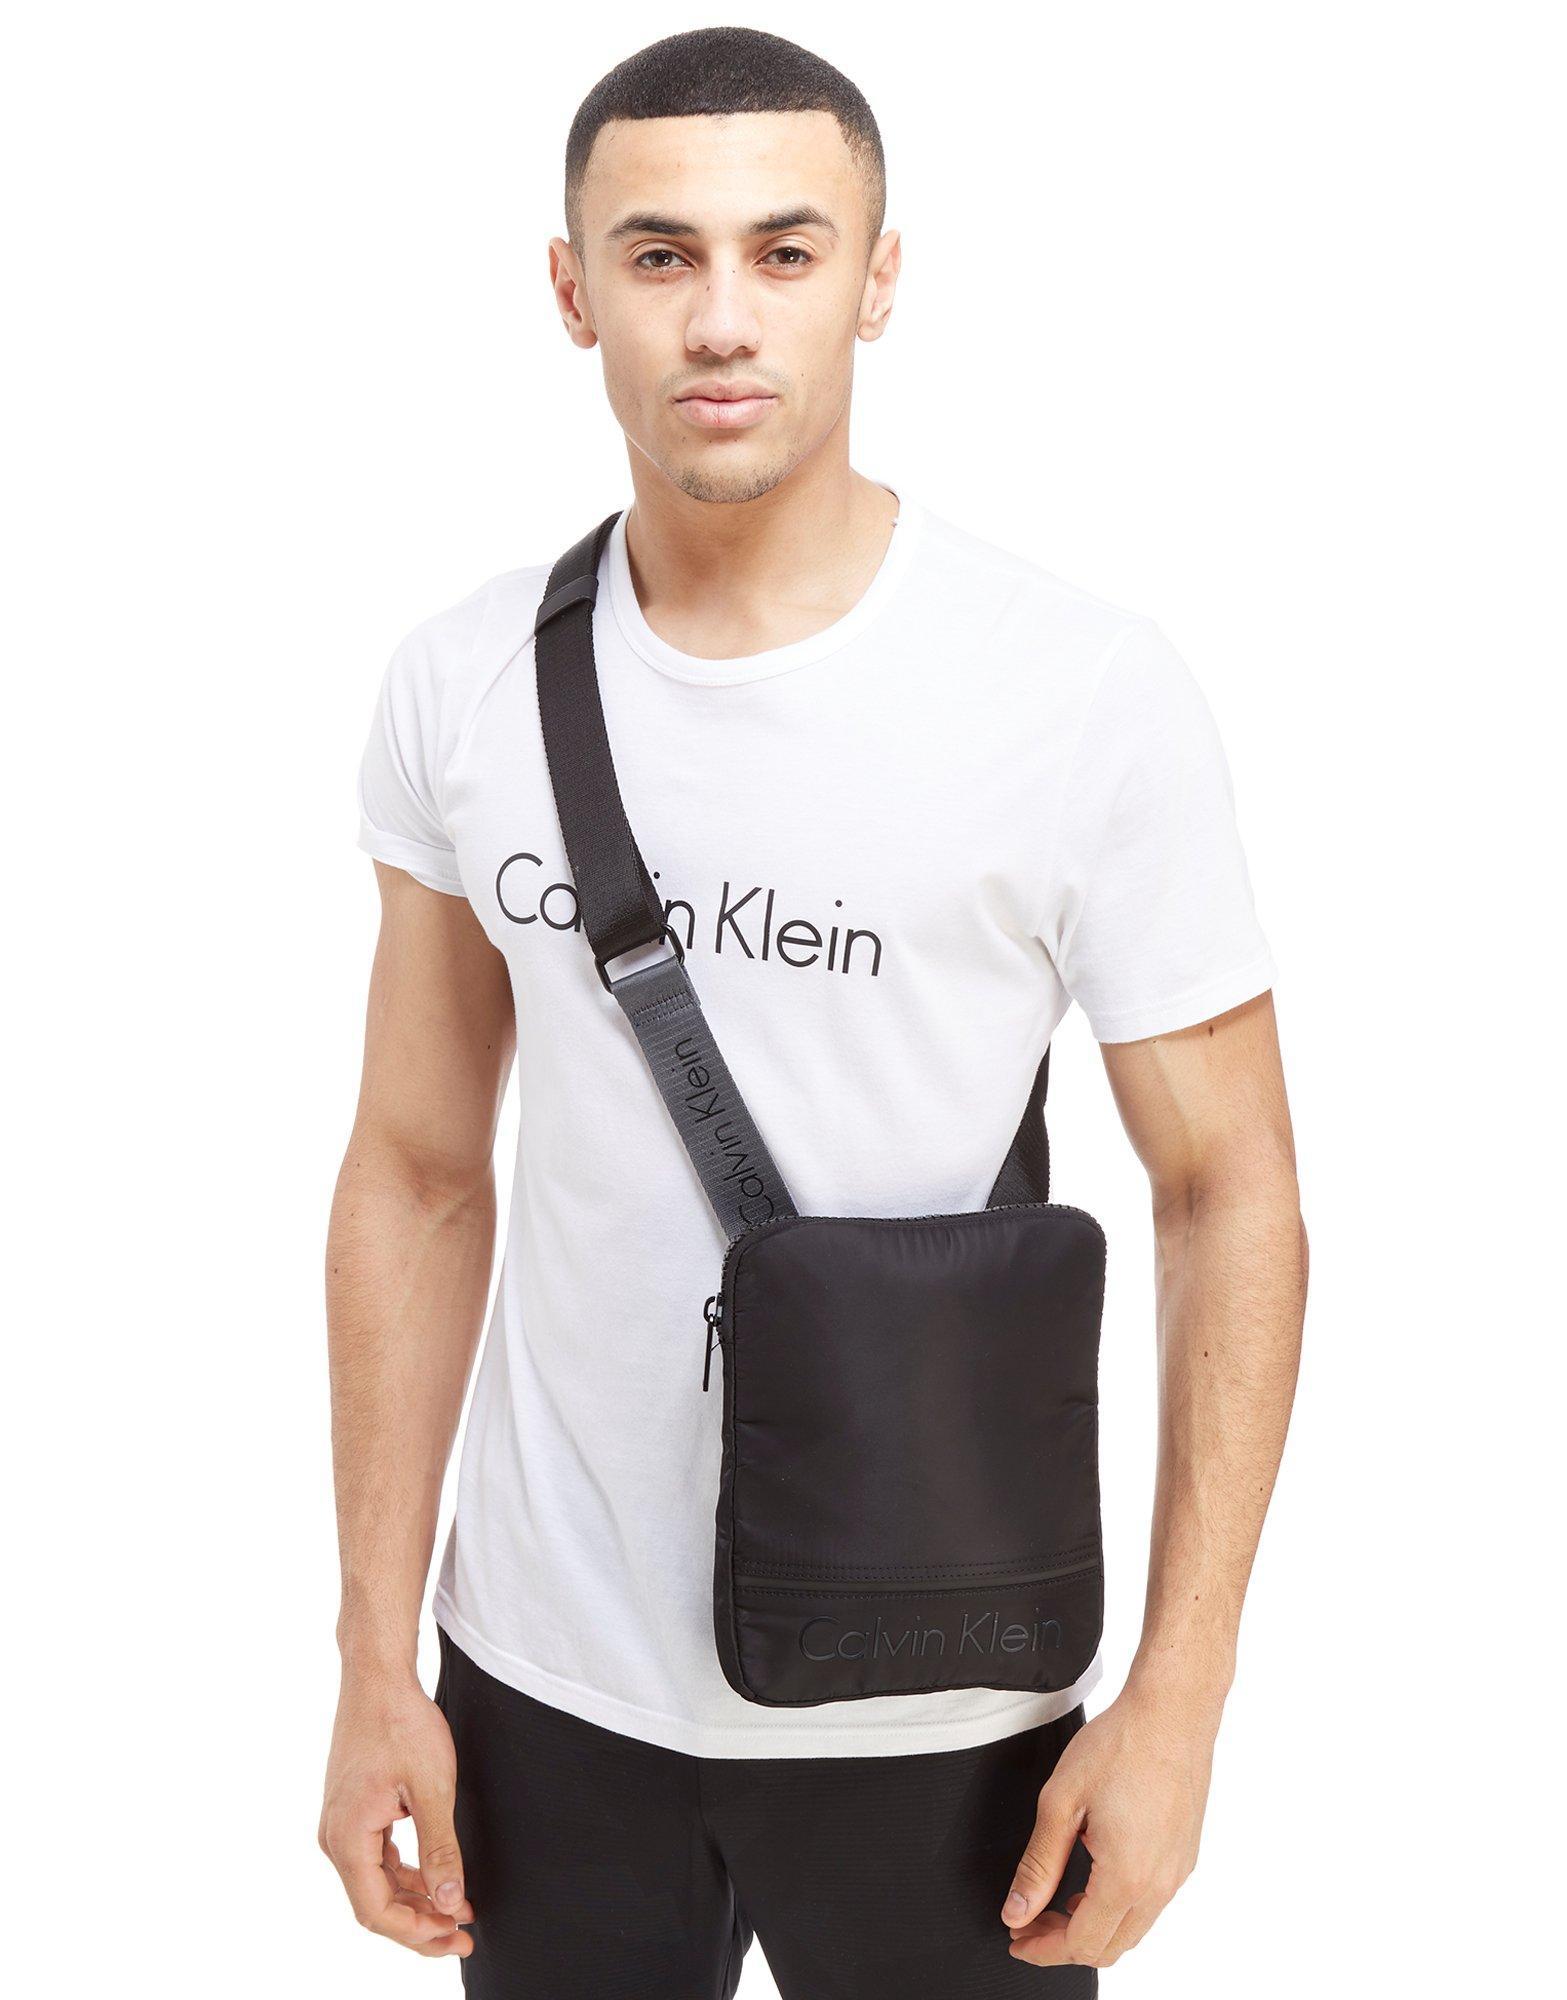 Calvin Klein Flat Cross Body Bag Factory Sale, 55% OFF |  www.colegiogamarra.com